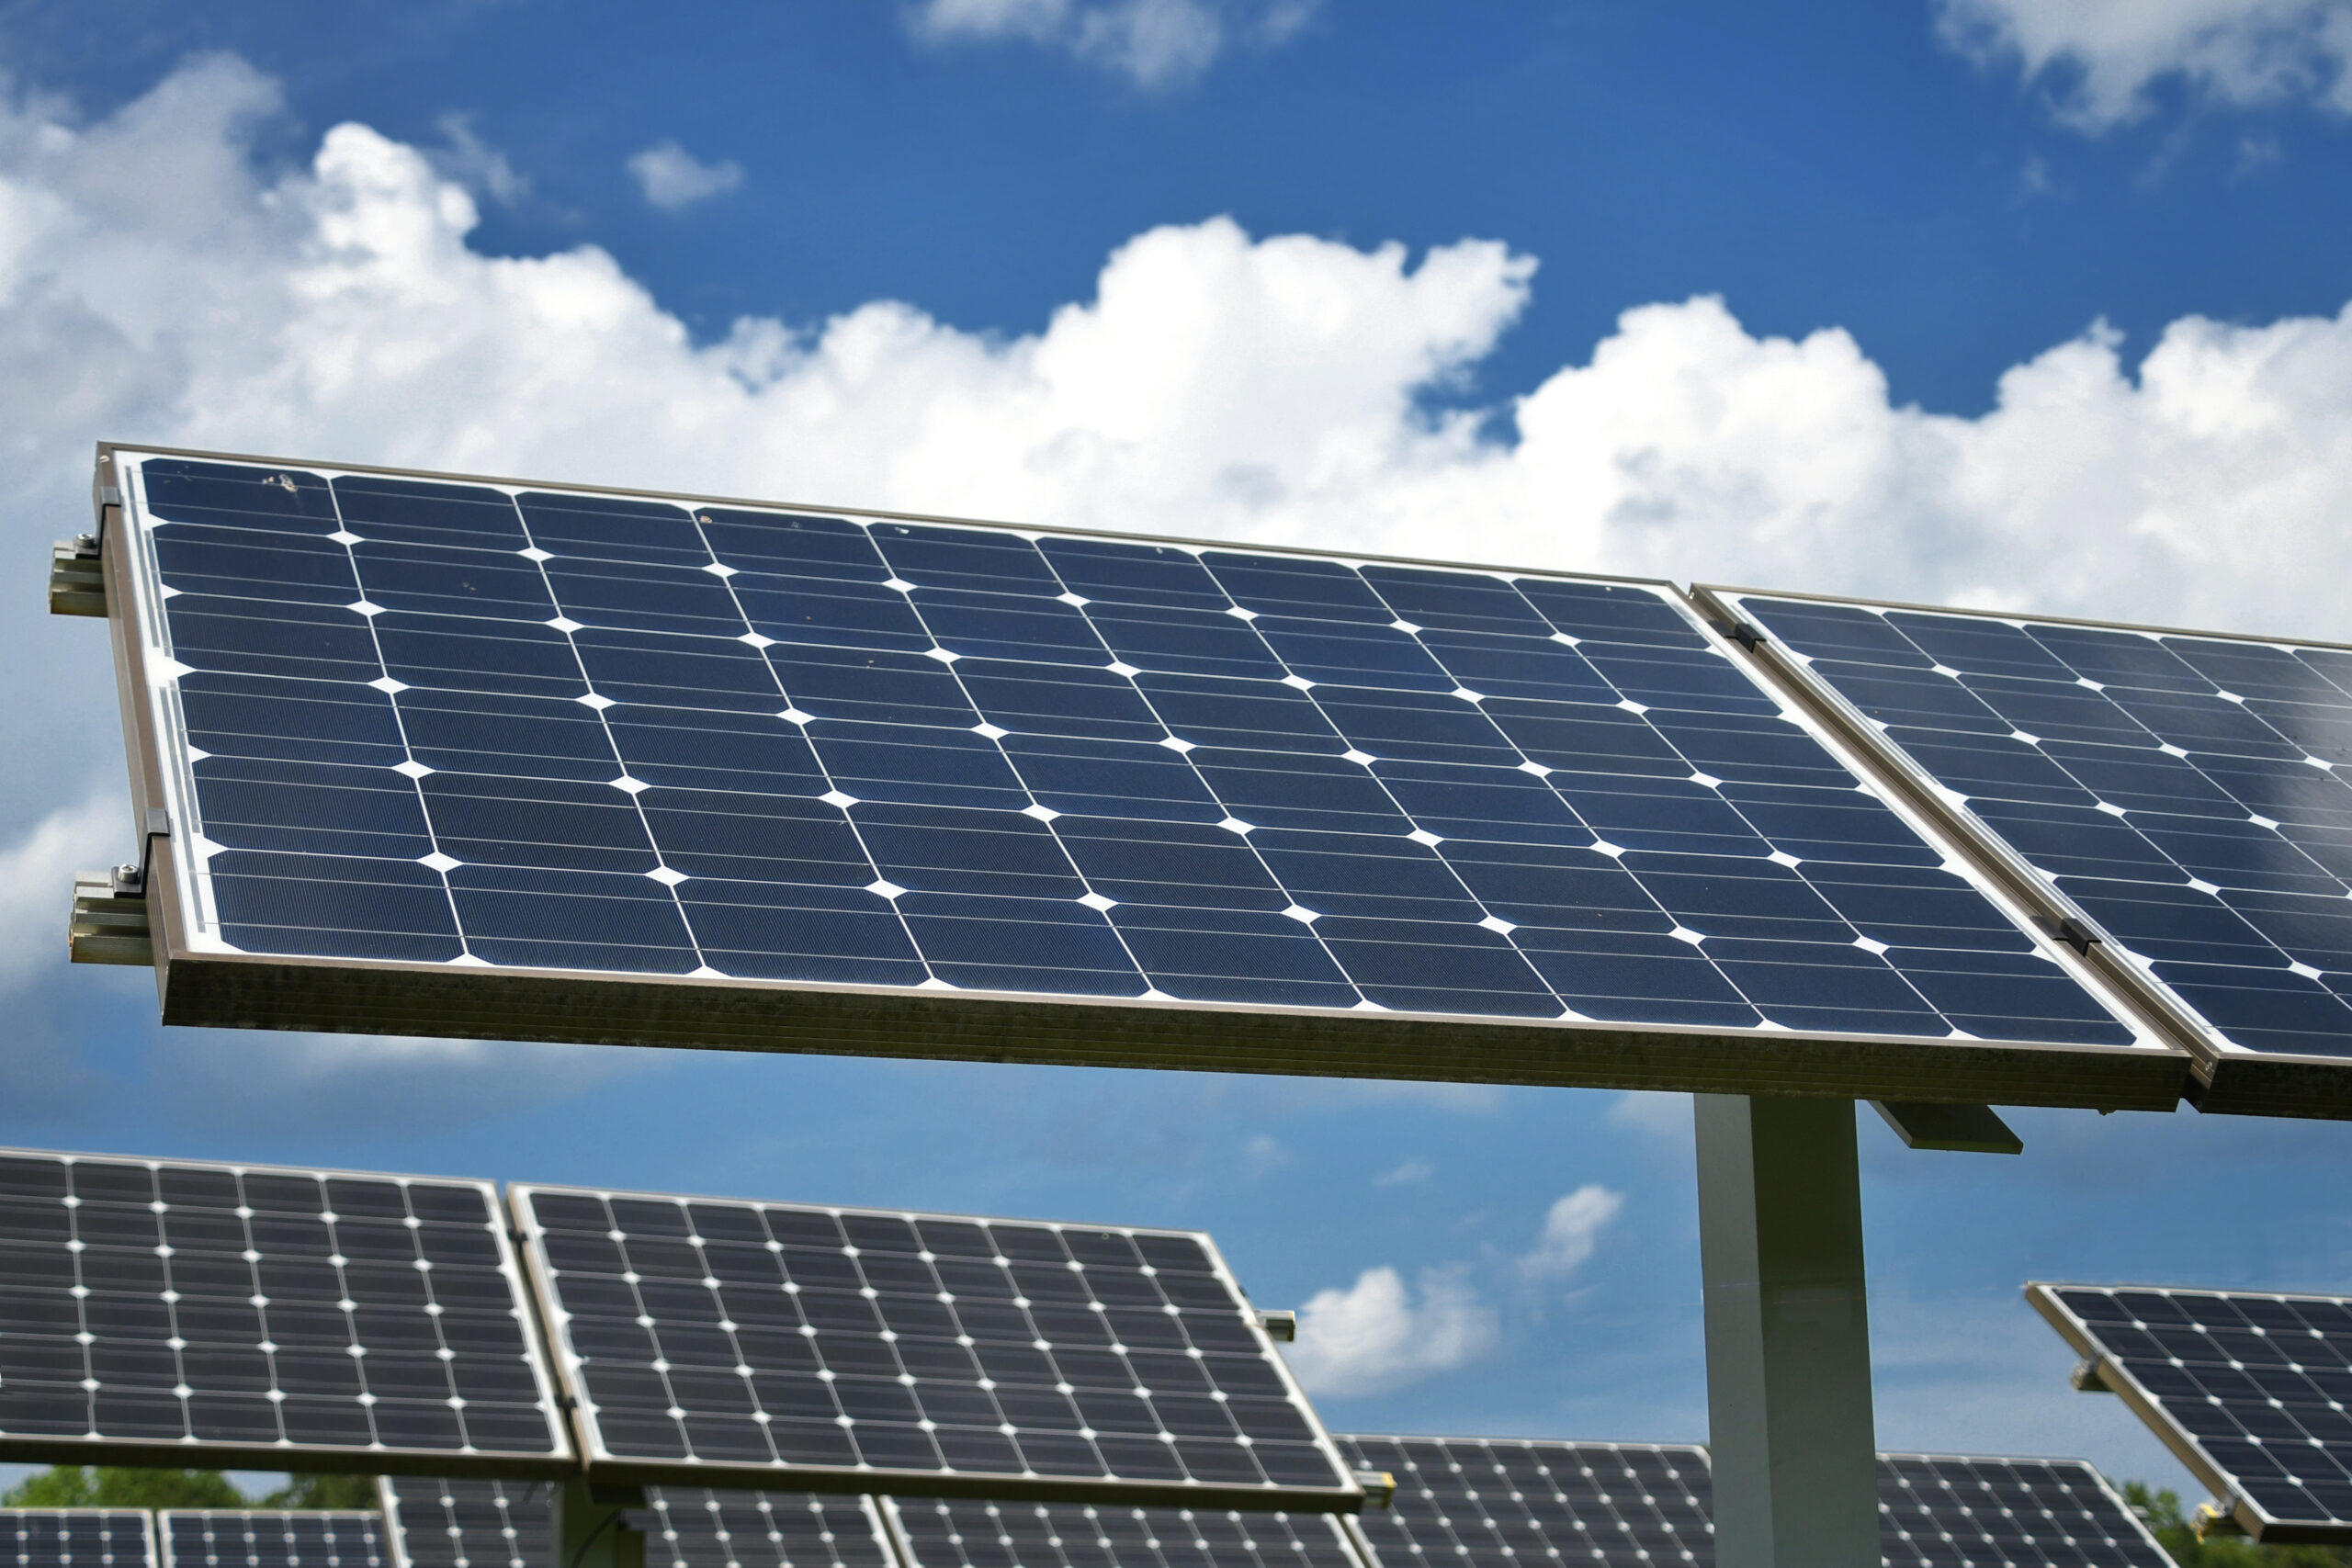 large array of free standing solar energy panels 2023 05 23 19 57 15 utc scaled